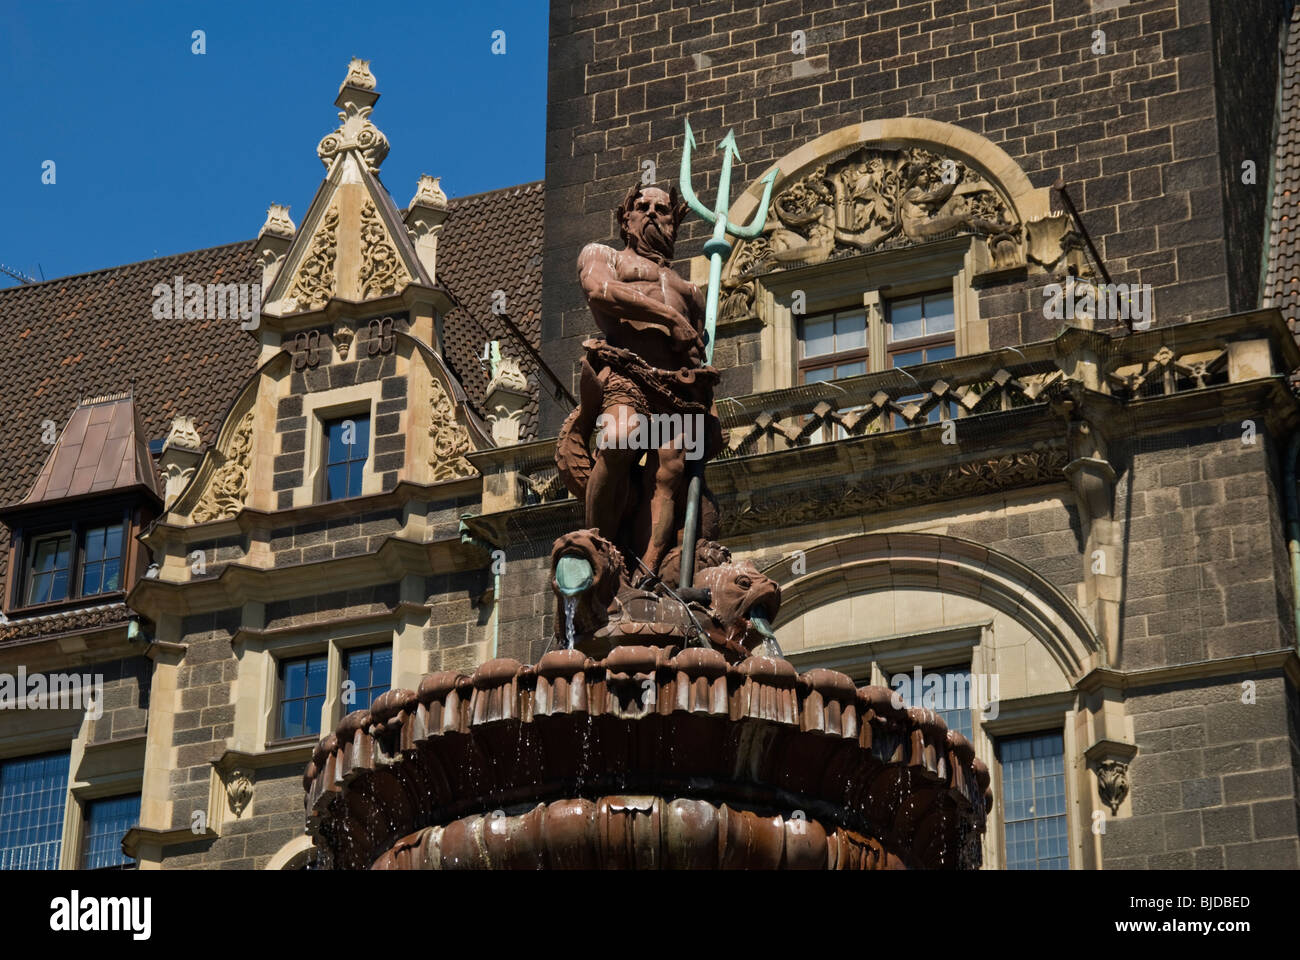 Detail view of the Elberfeld Town Hall, Elberfeld, North-Rhine-Westphalia, Germany Stock Photo